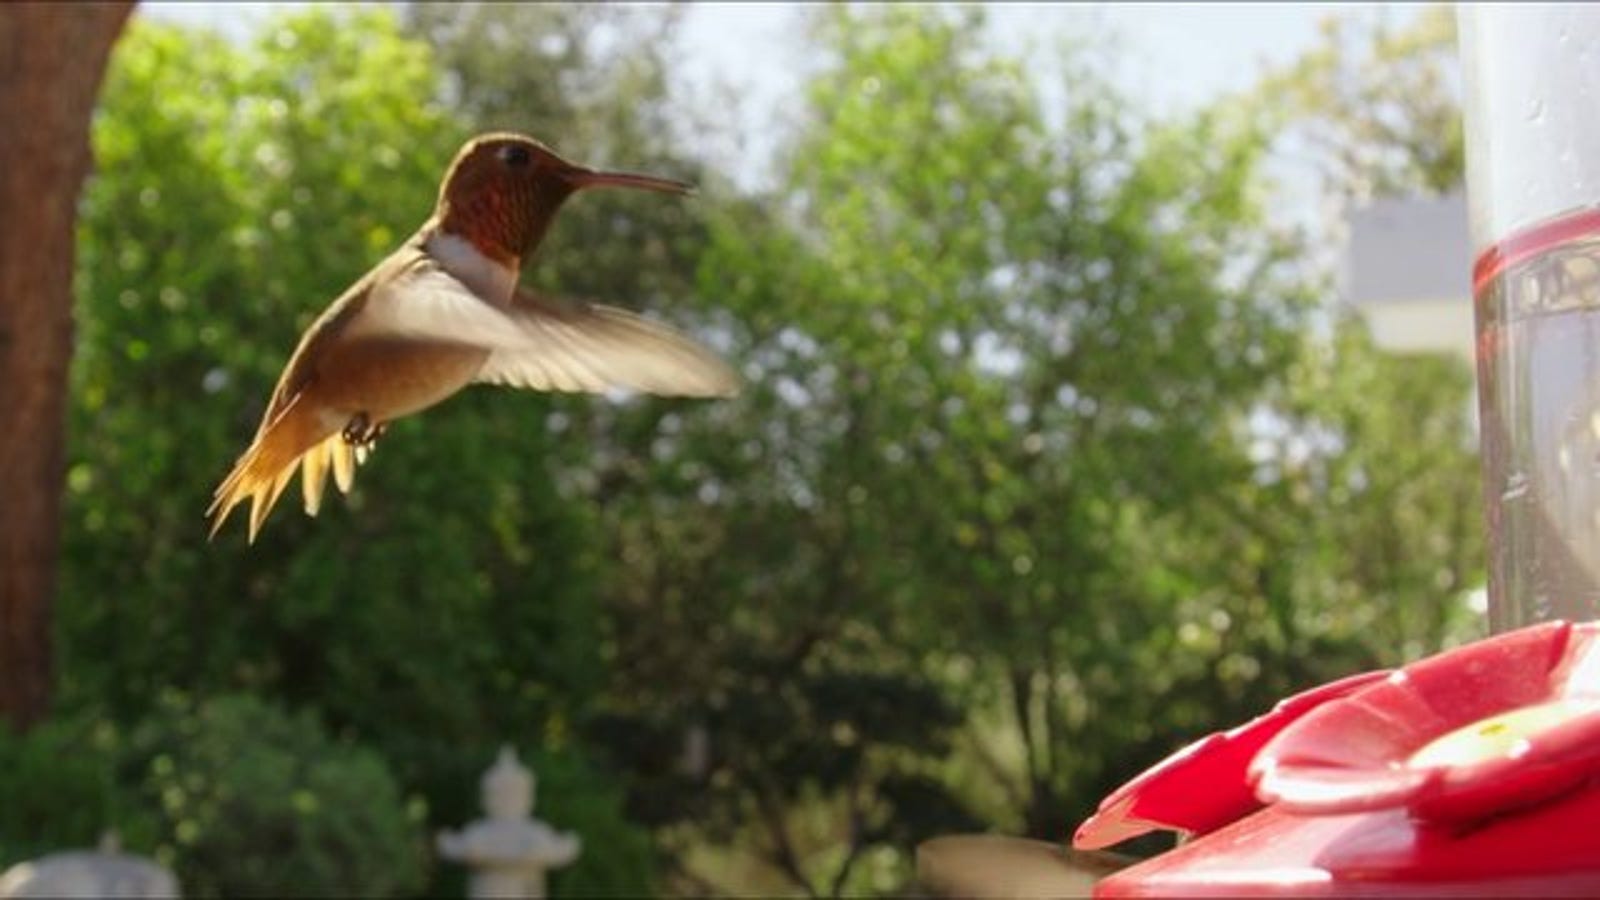 Watching A Hummingbird In Slow Motion Is Still Pretty Majestic